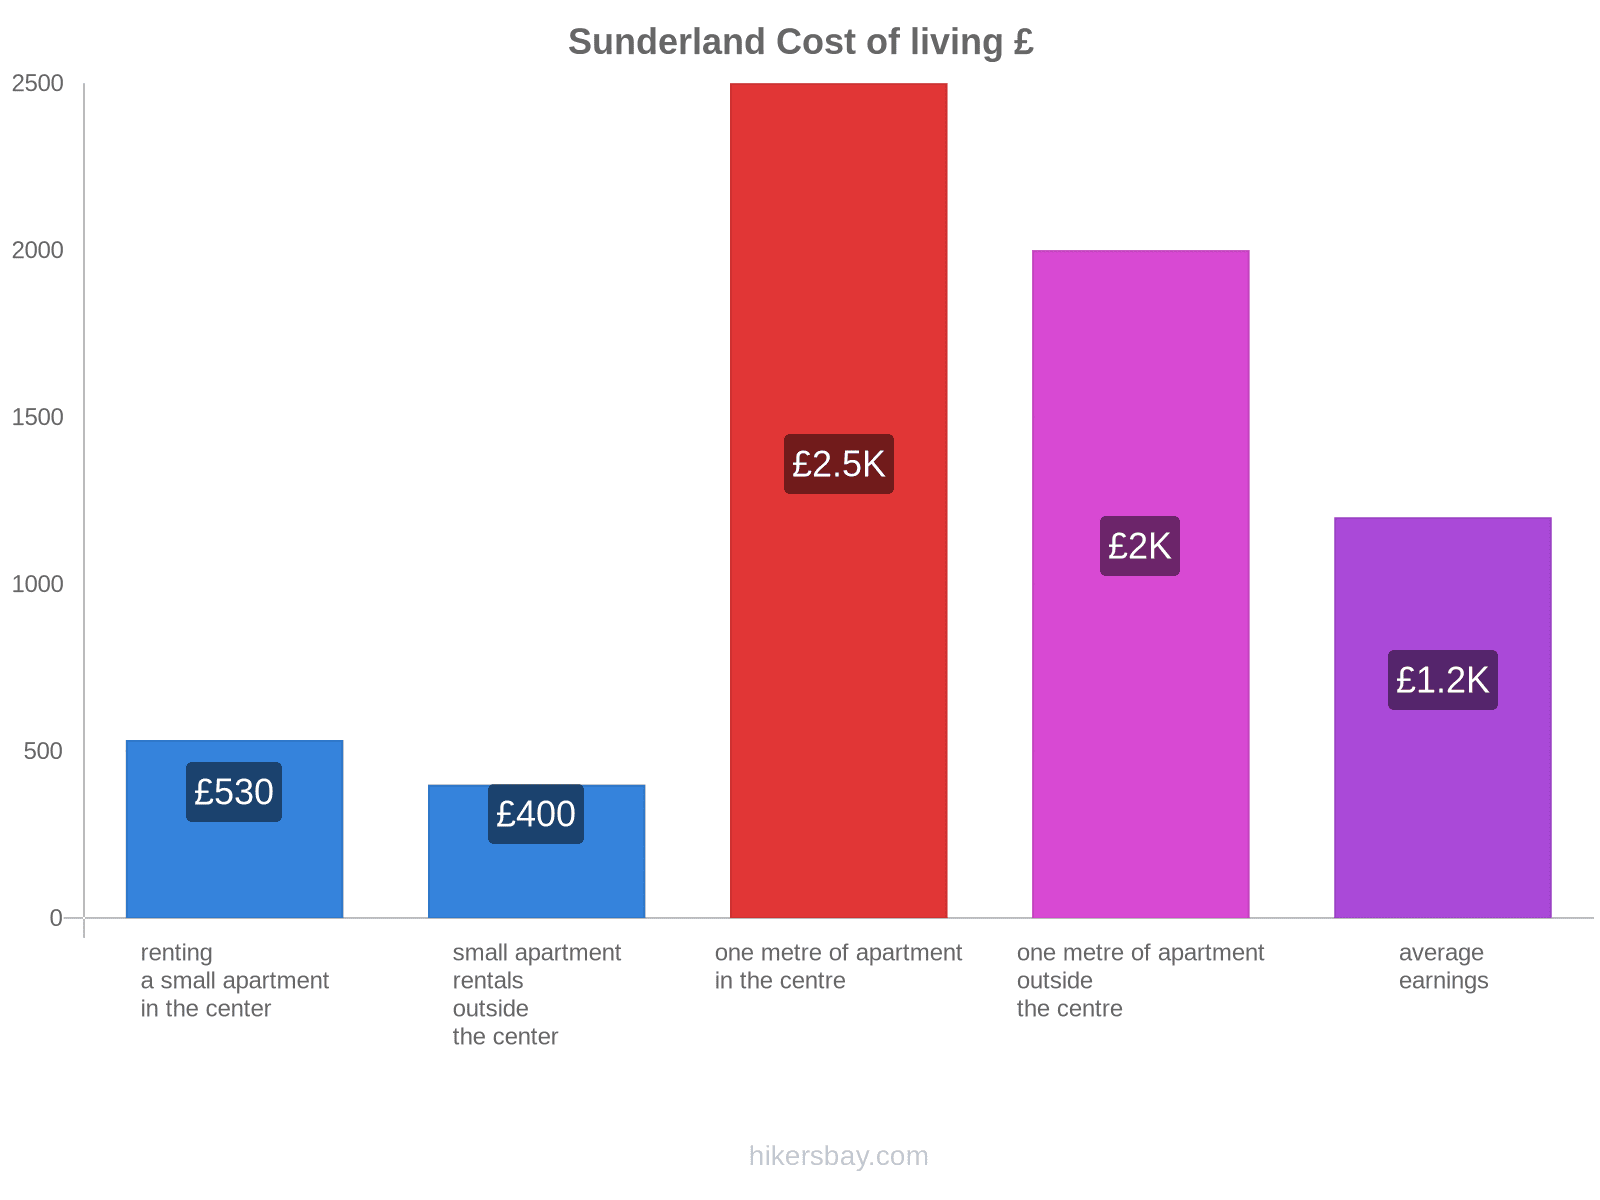 Sunderland cost of living hikersbay.com